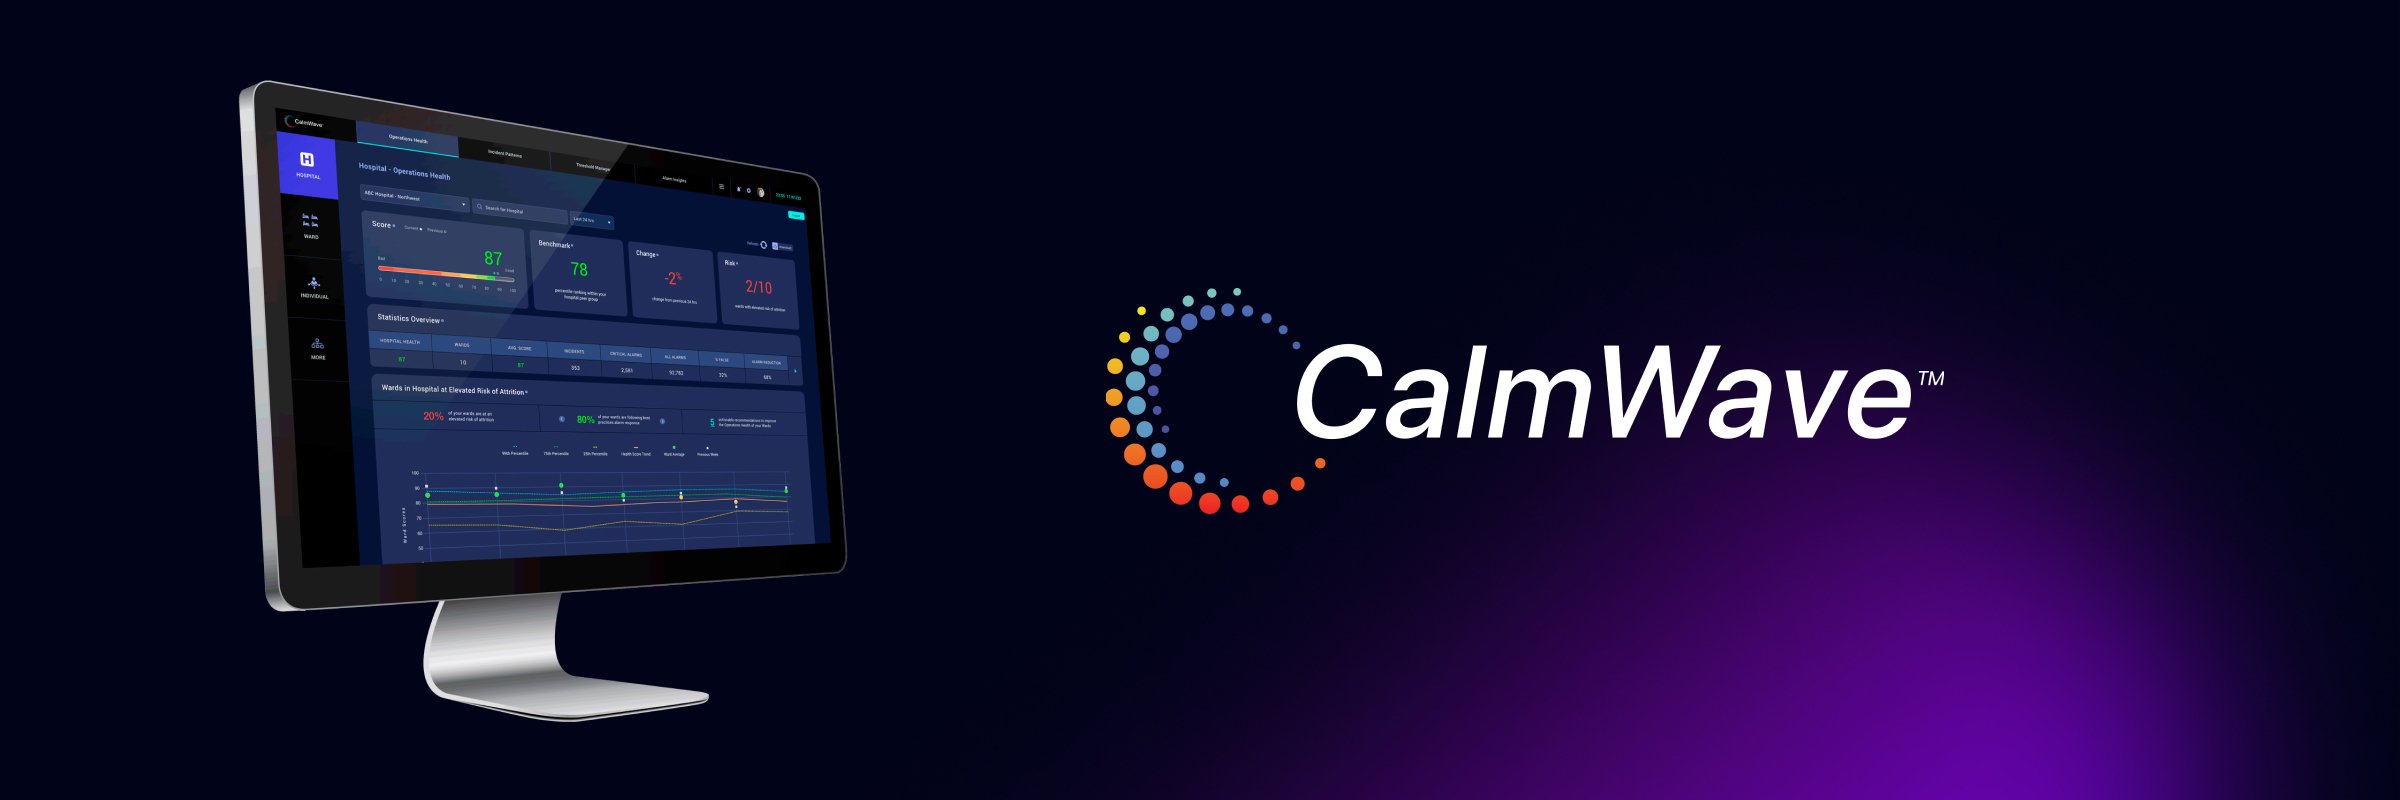 Image of the CalmWave logo and platform interface.